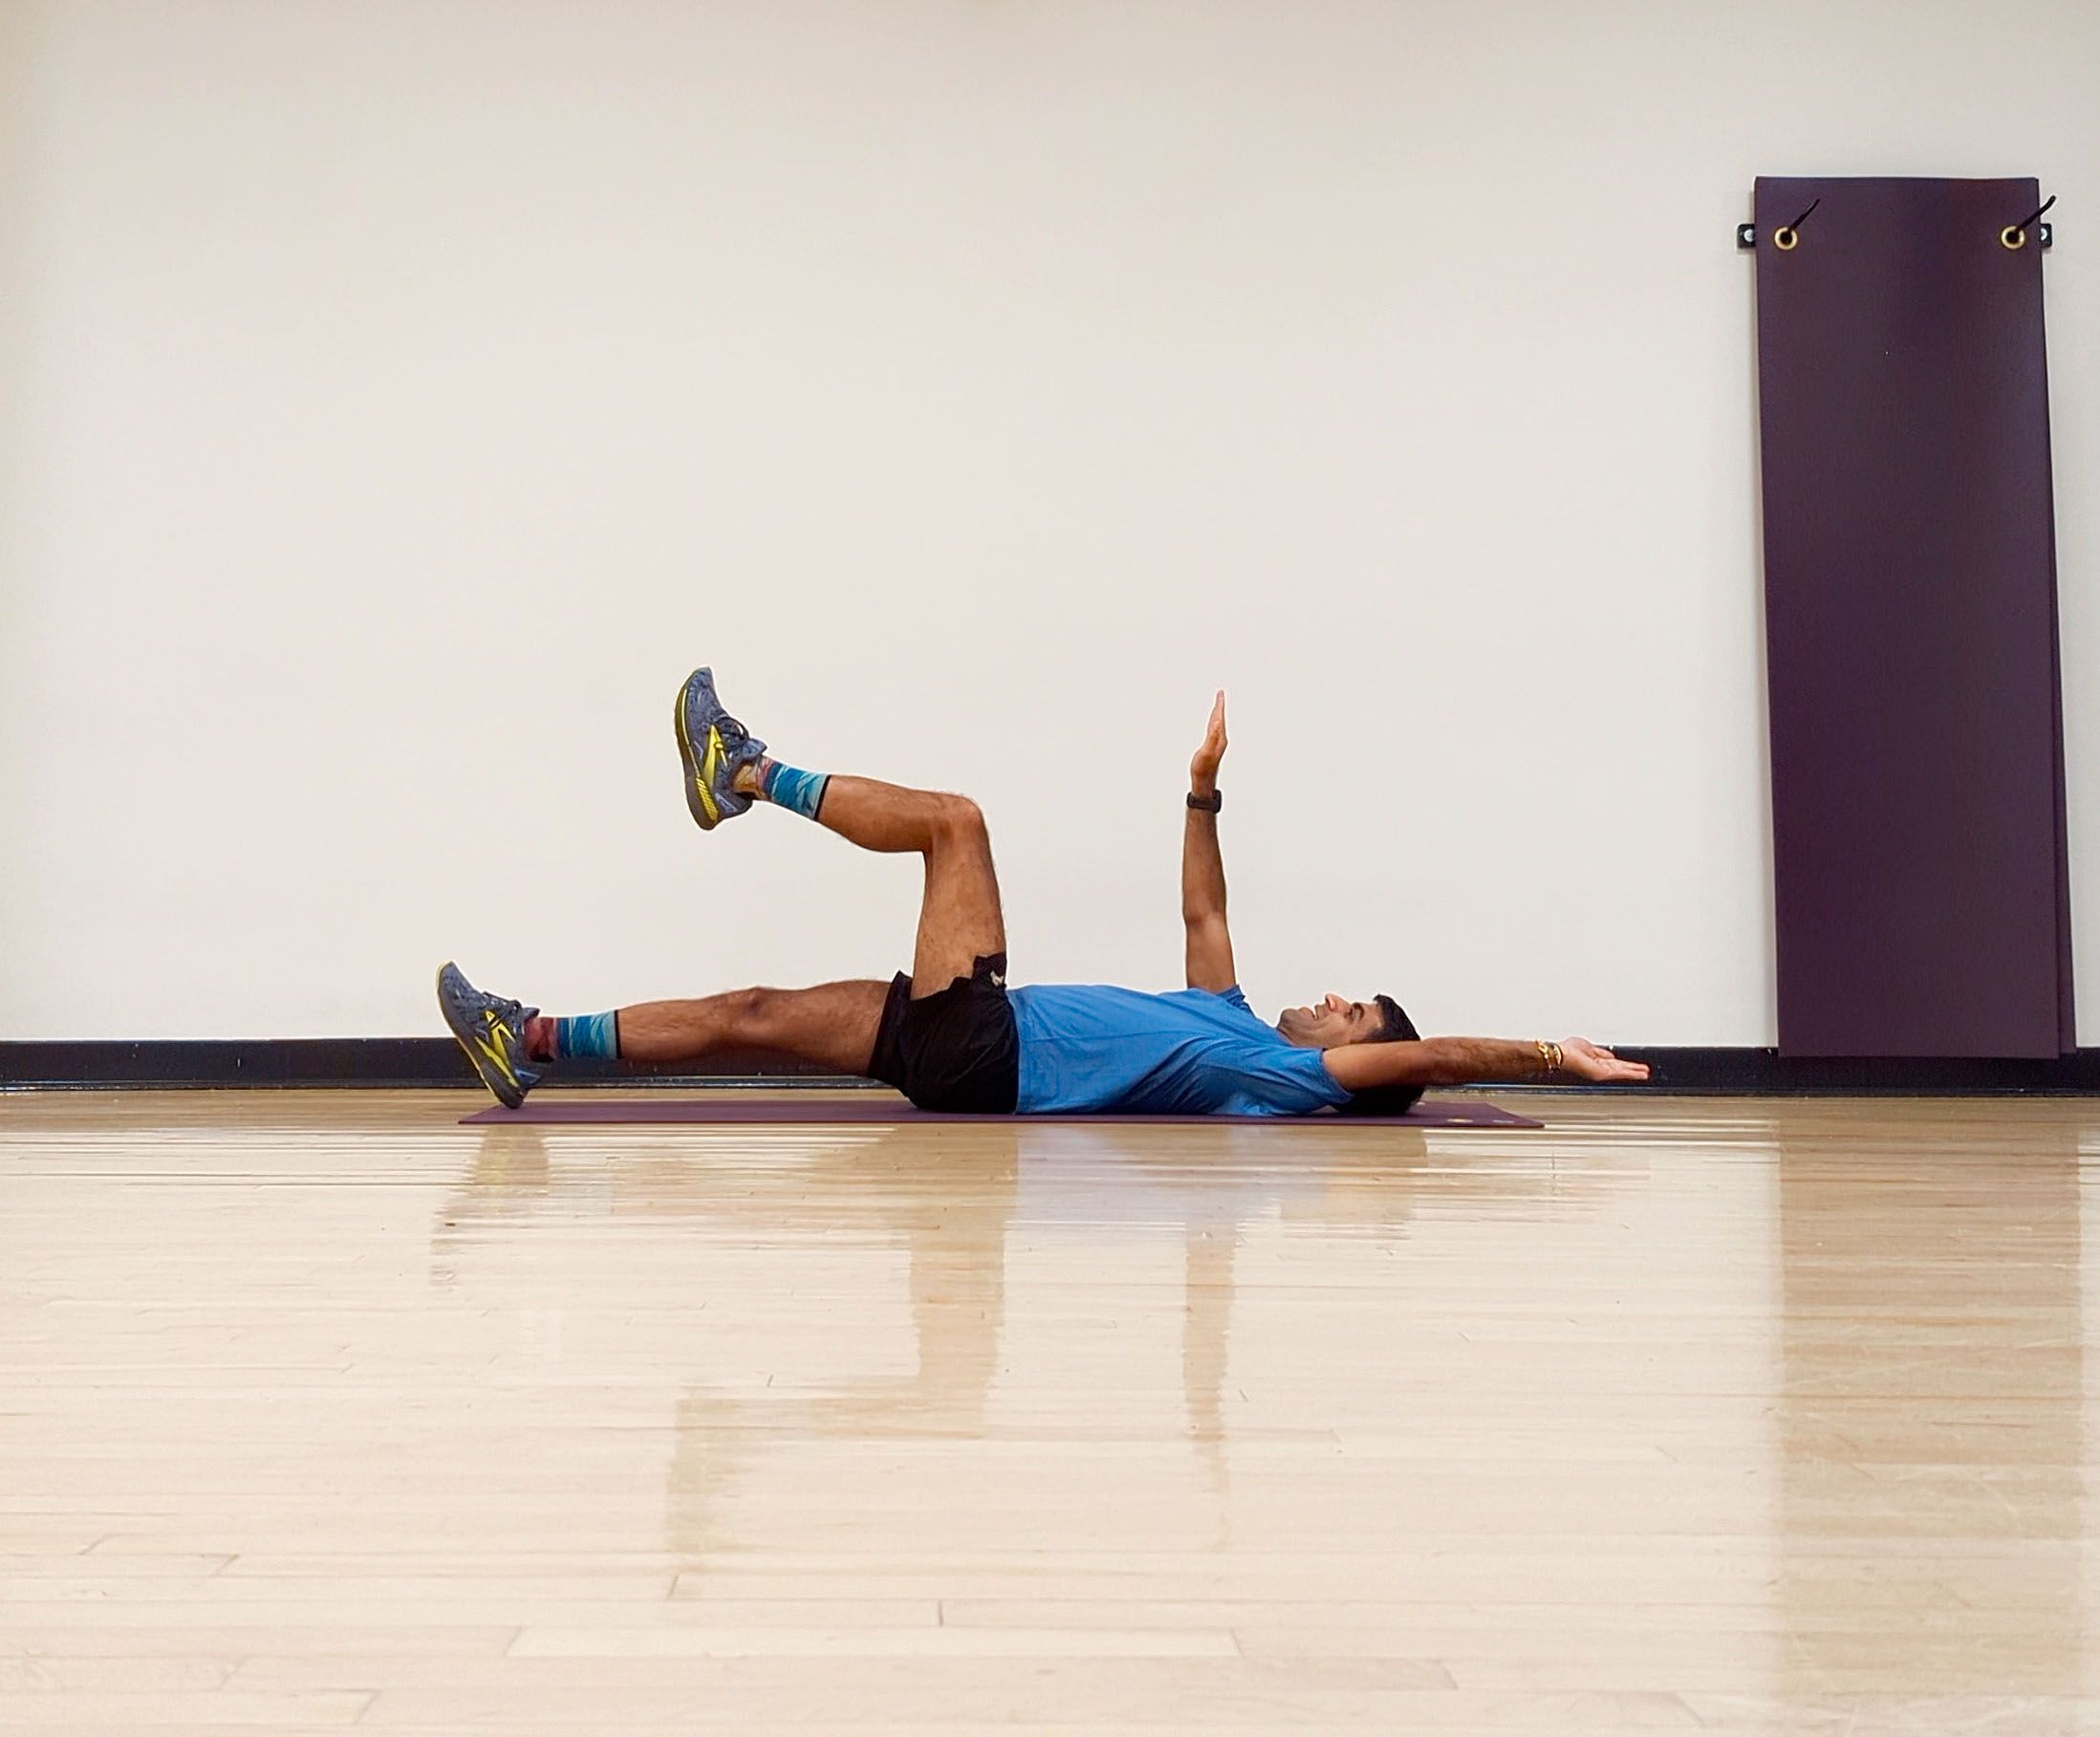 Runners: are single-leg or double-leg exercises best?